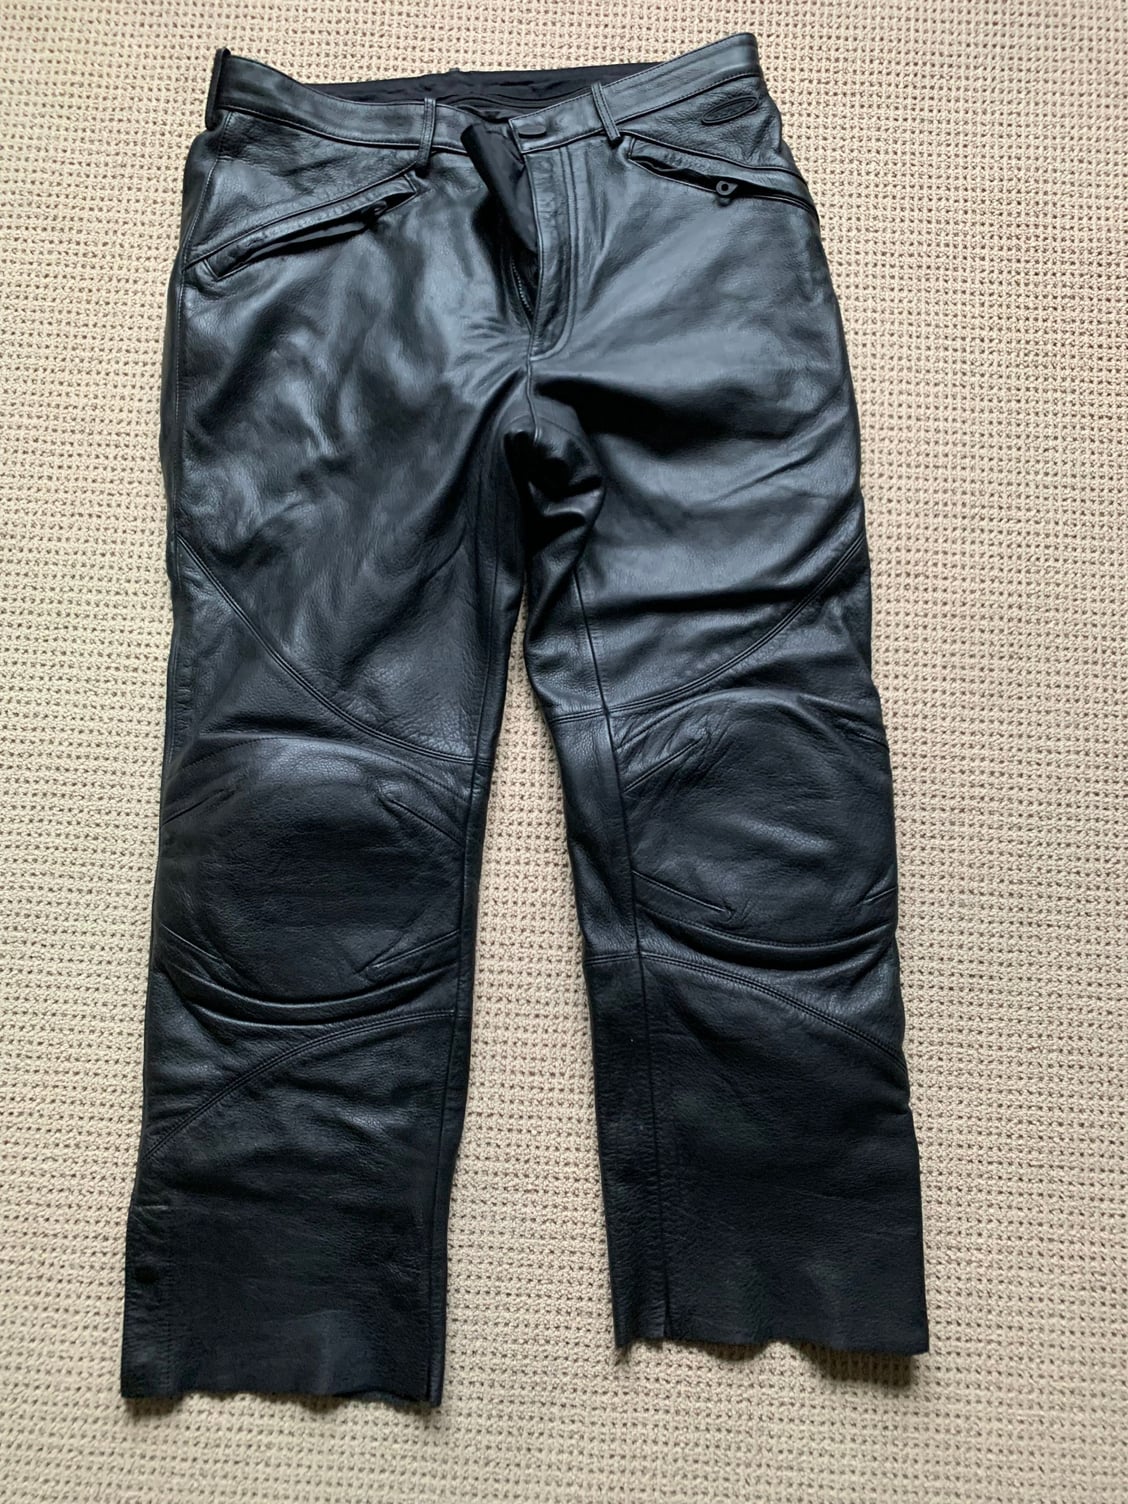 FXRG Leather Pants 36